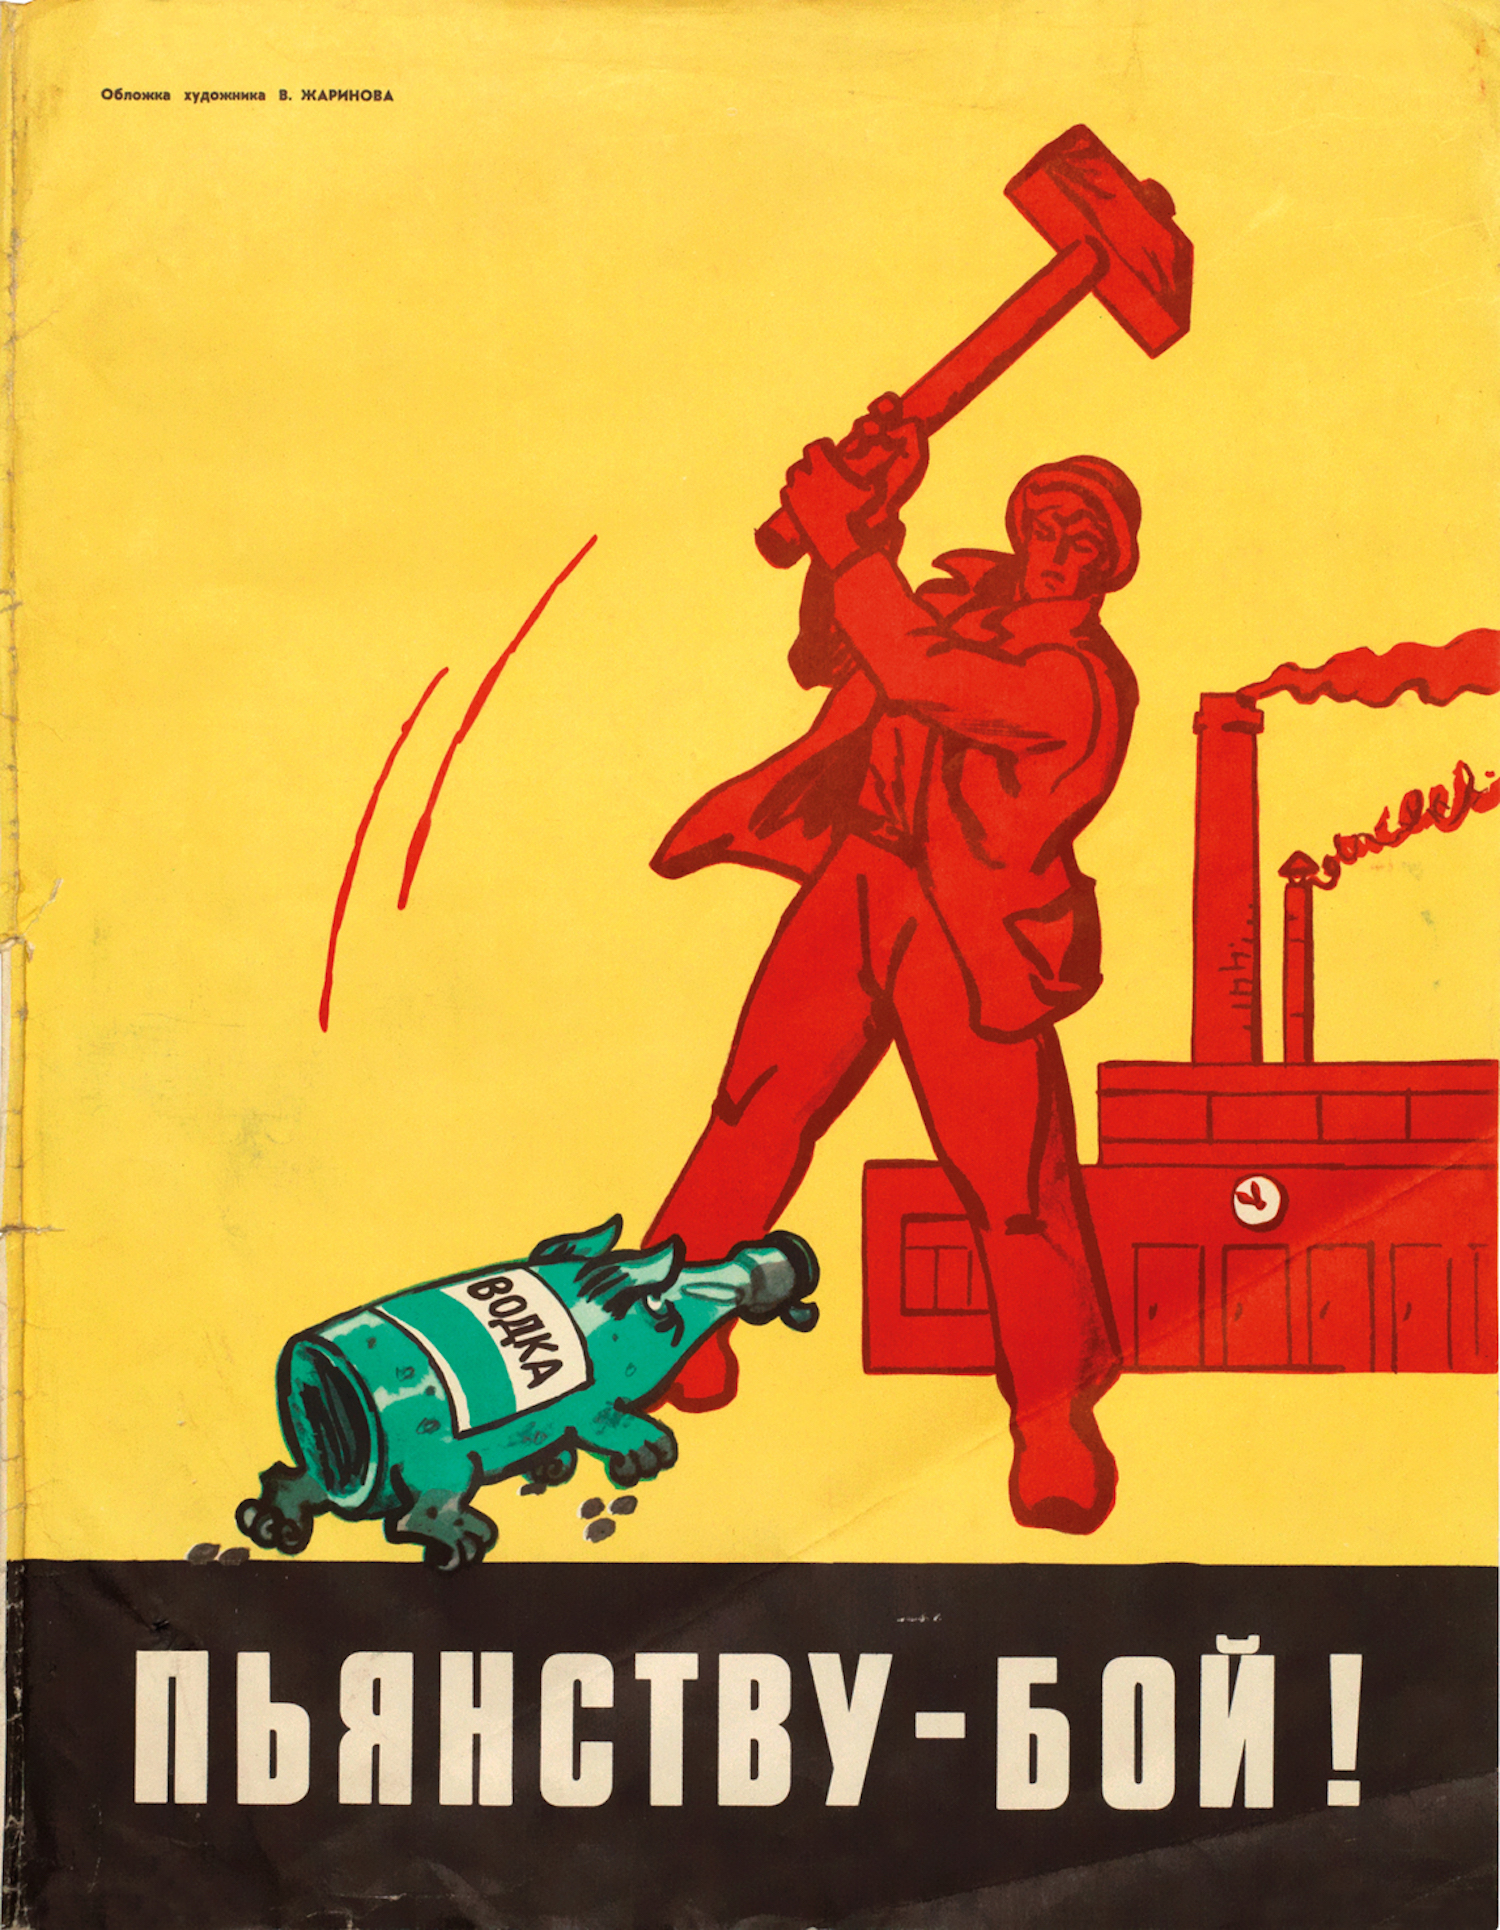 Soviet Anti-Alcohol Posters